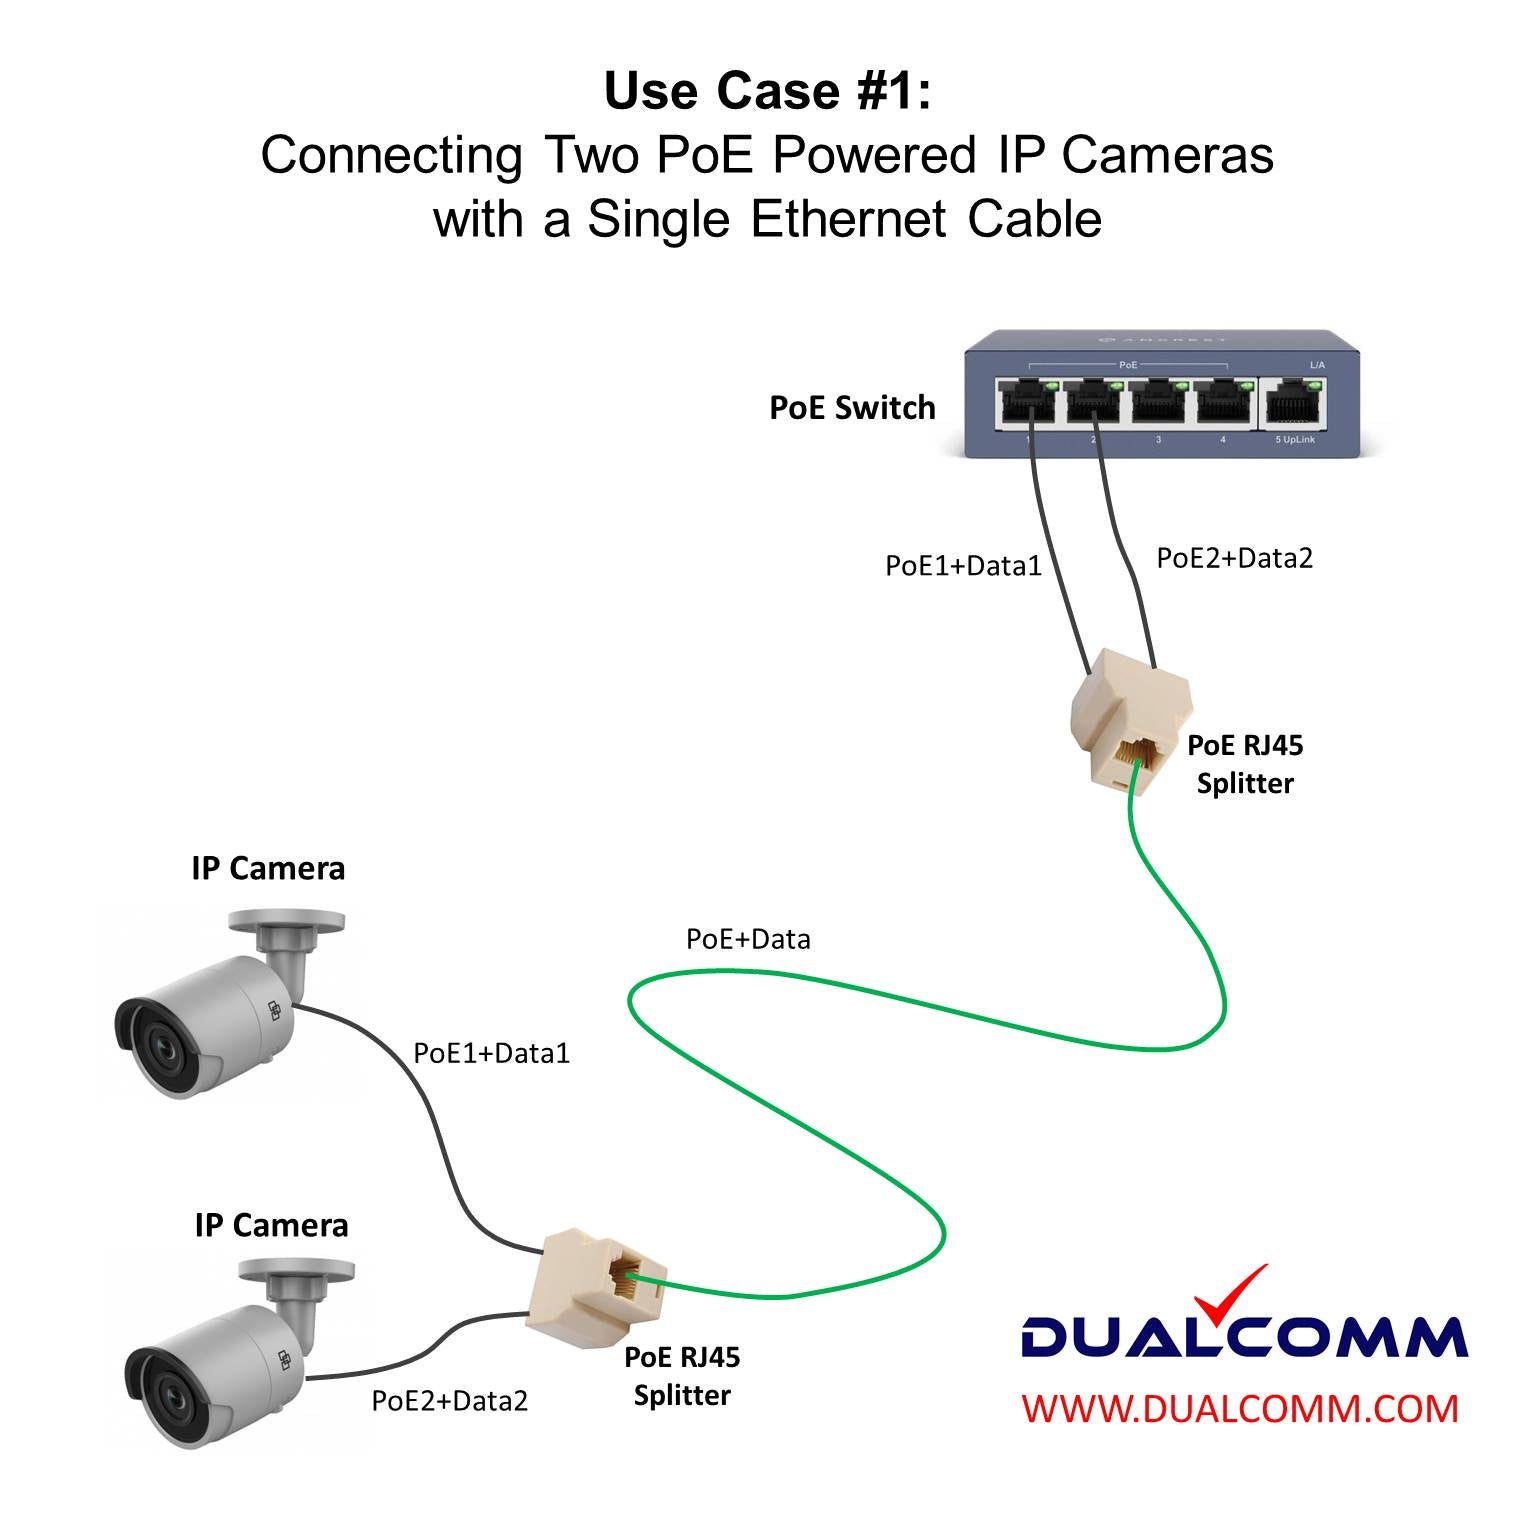 RJ45/RJ11 Splitter Cable Sharing Kit for Ethernet and Phone Lines